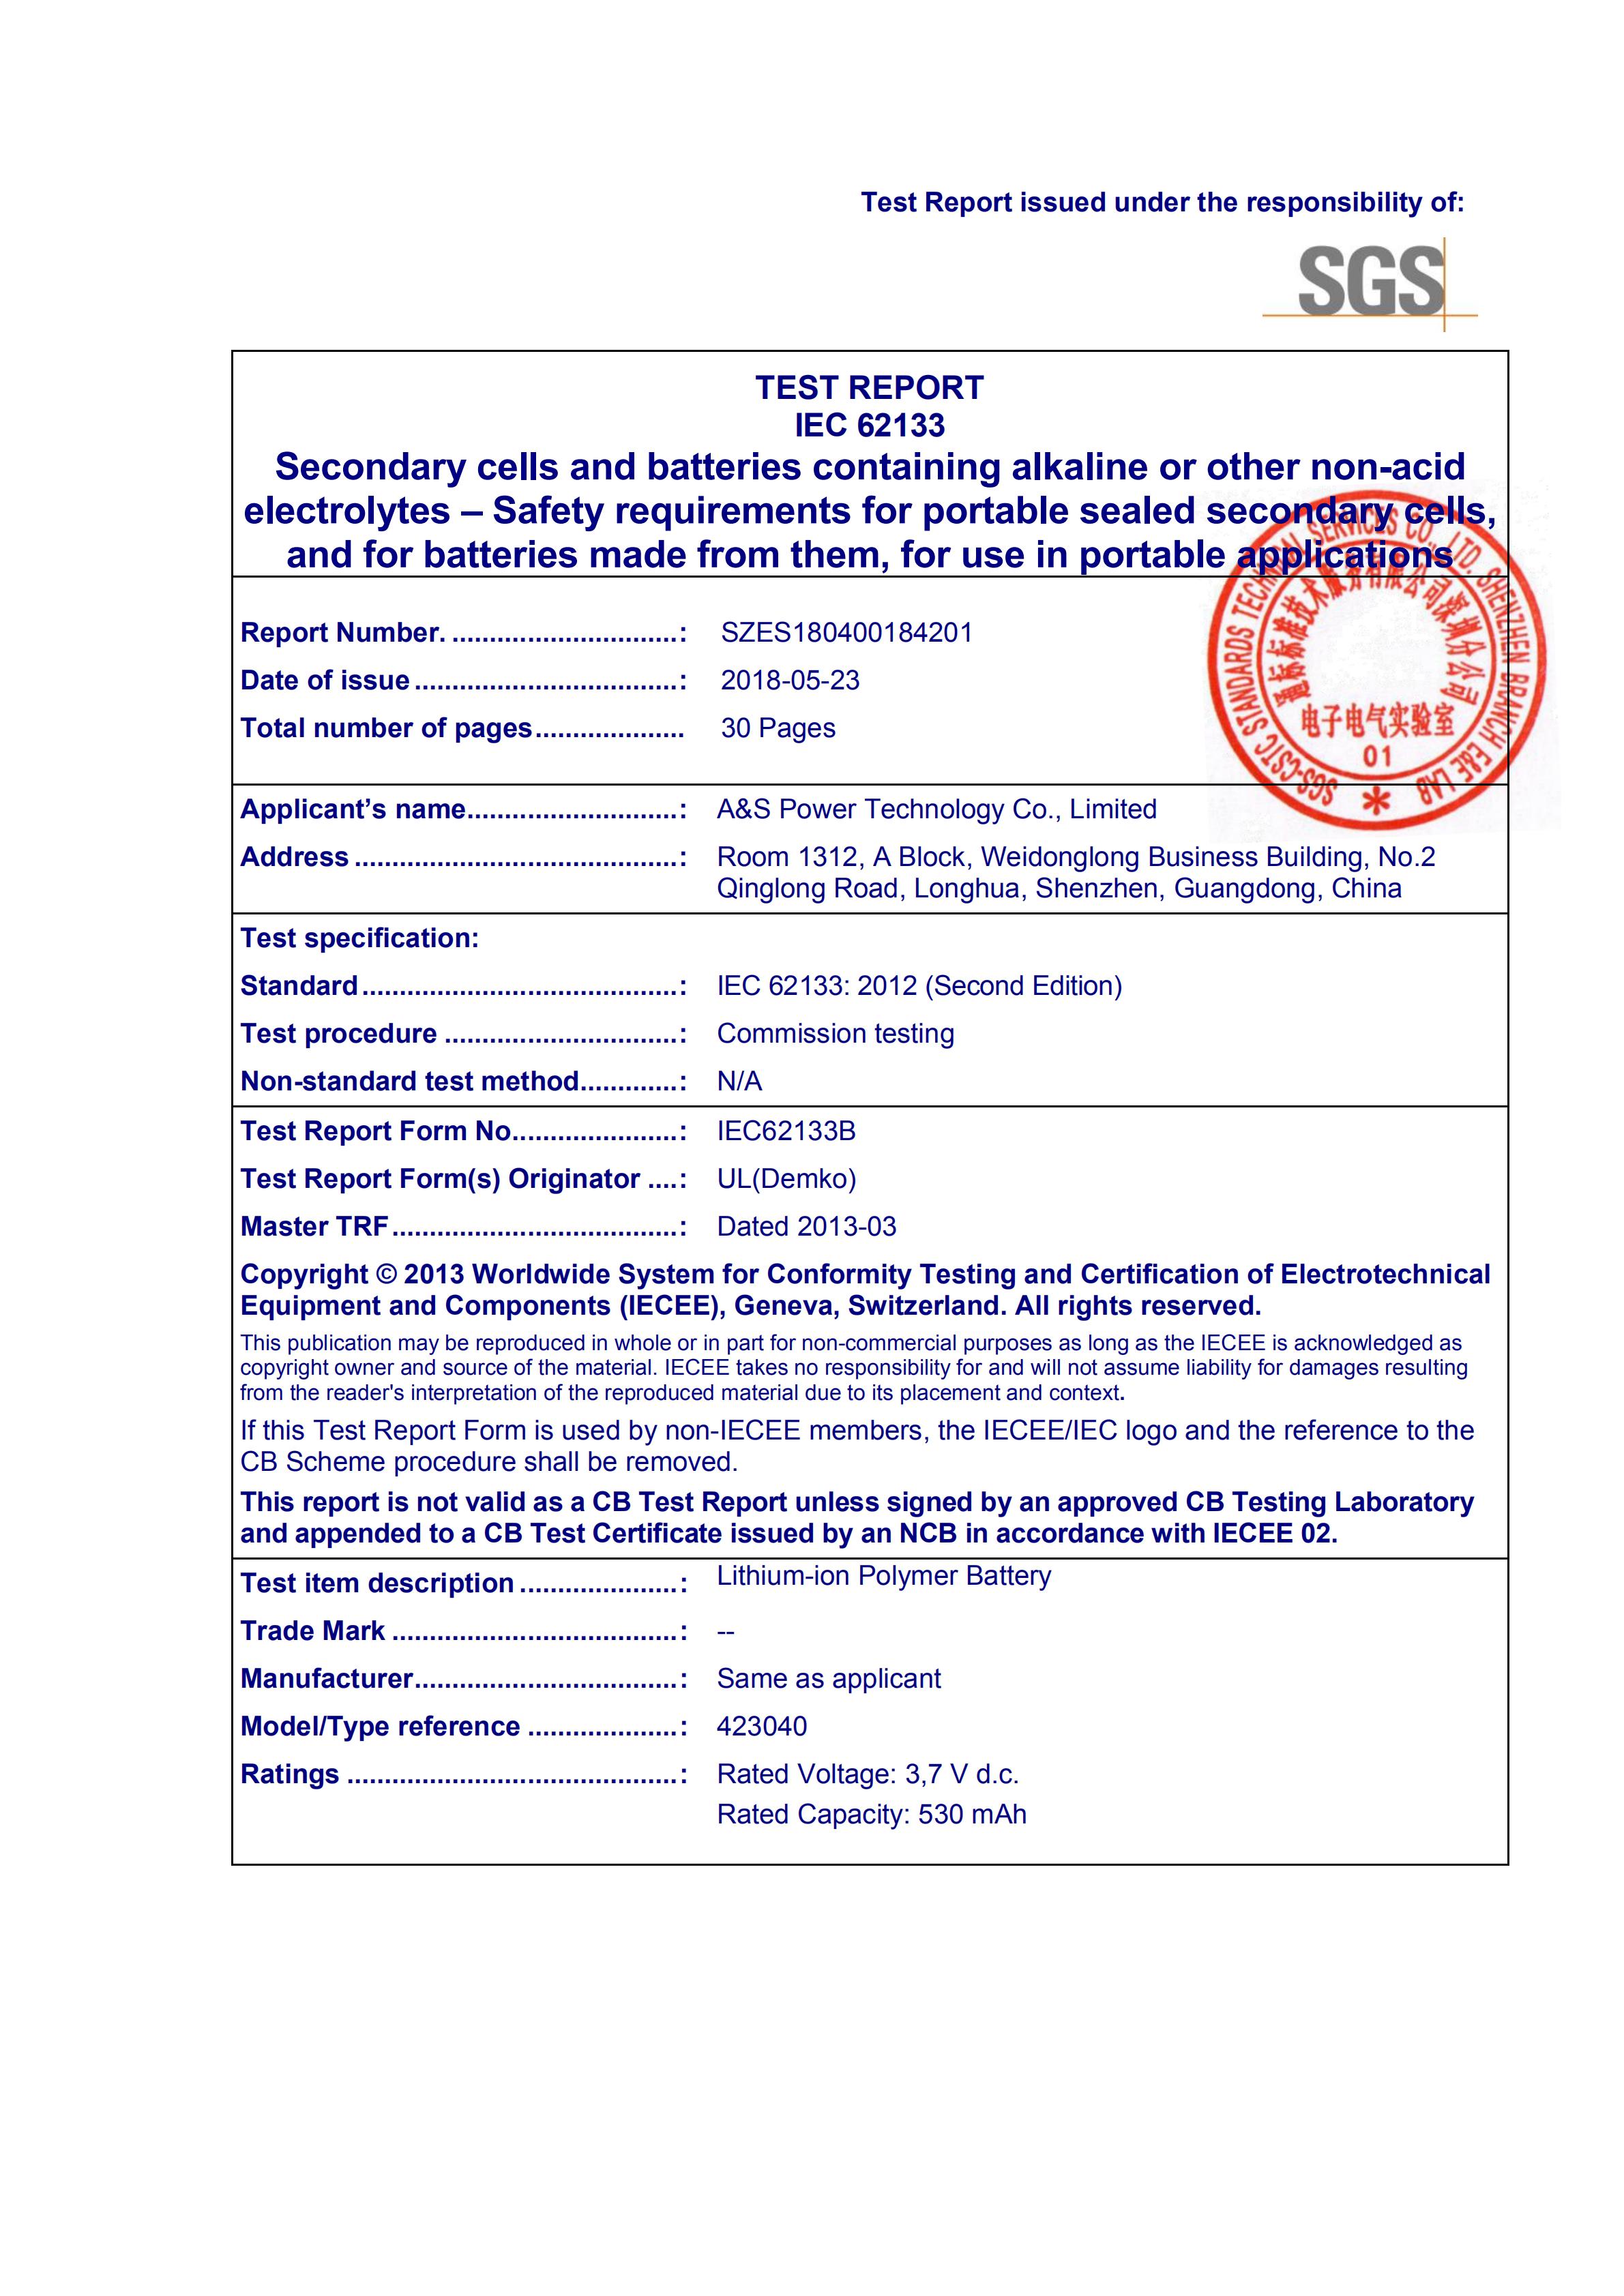 A&S Power 423040 3.7v 530mah IEC62133 Certification